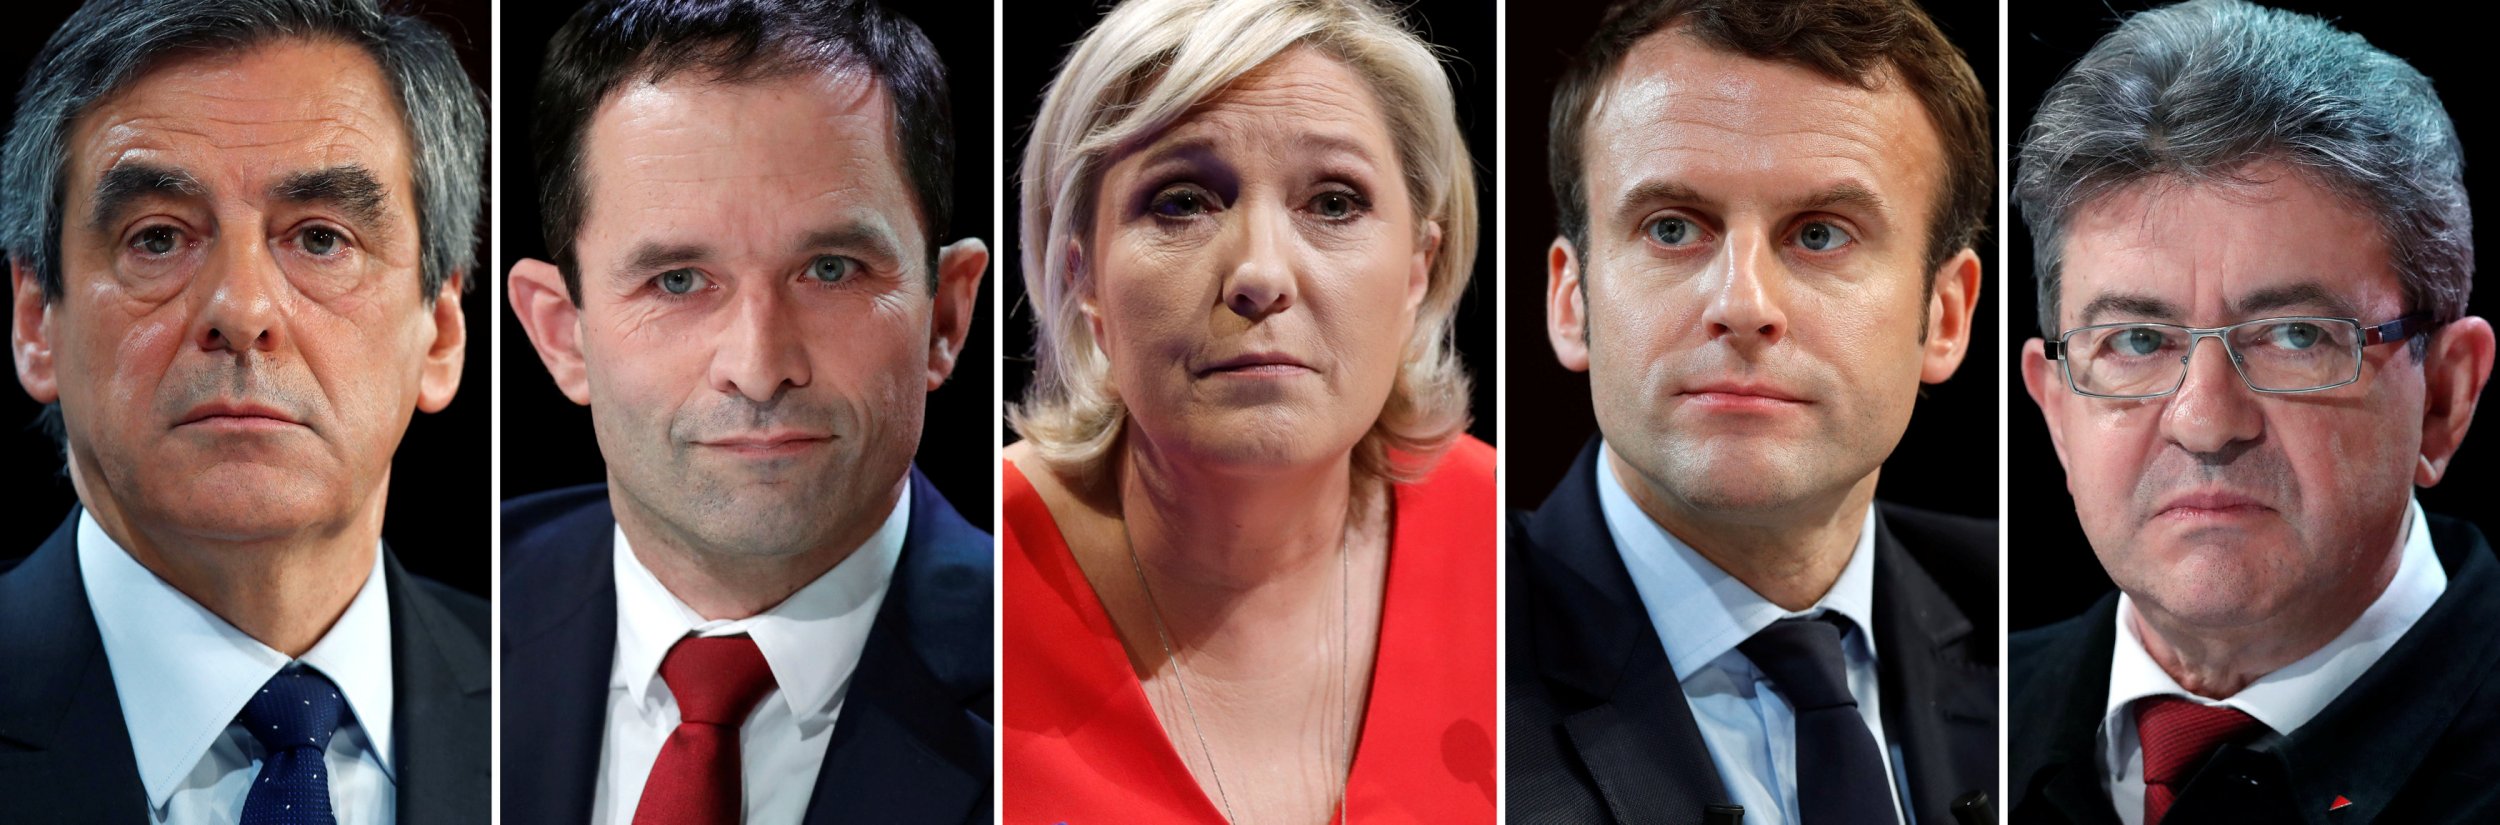 Le pen, Macron, Fillon, Hamon, Melenchon